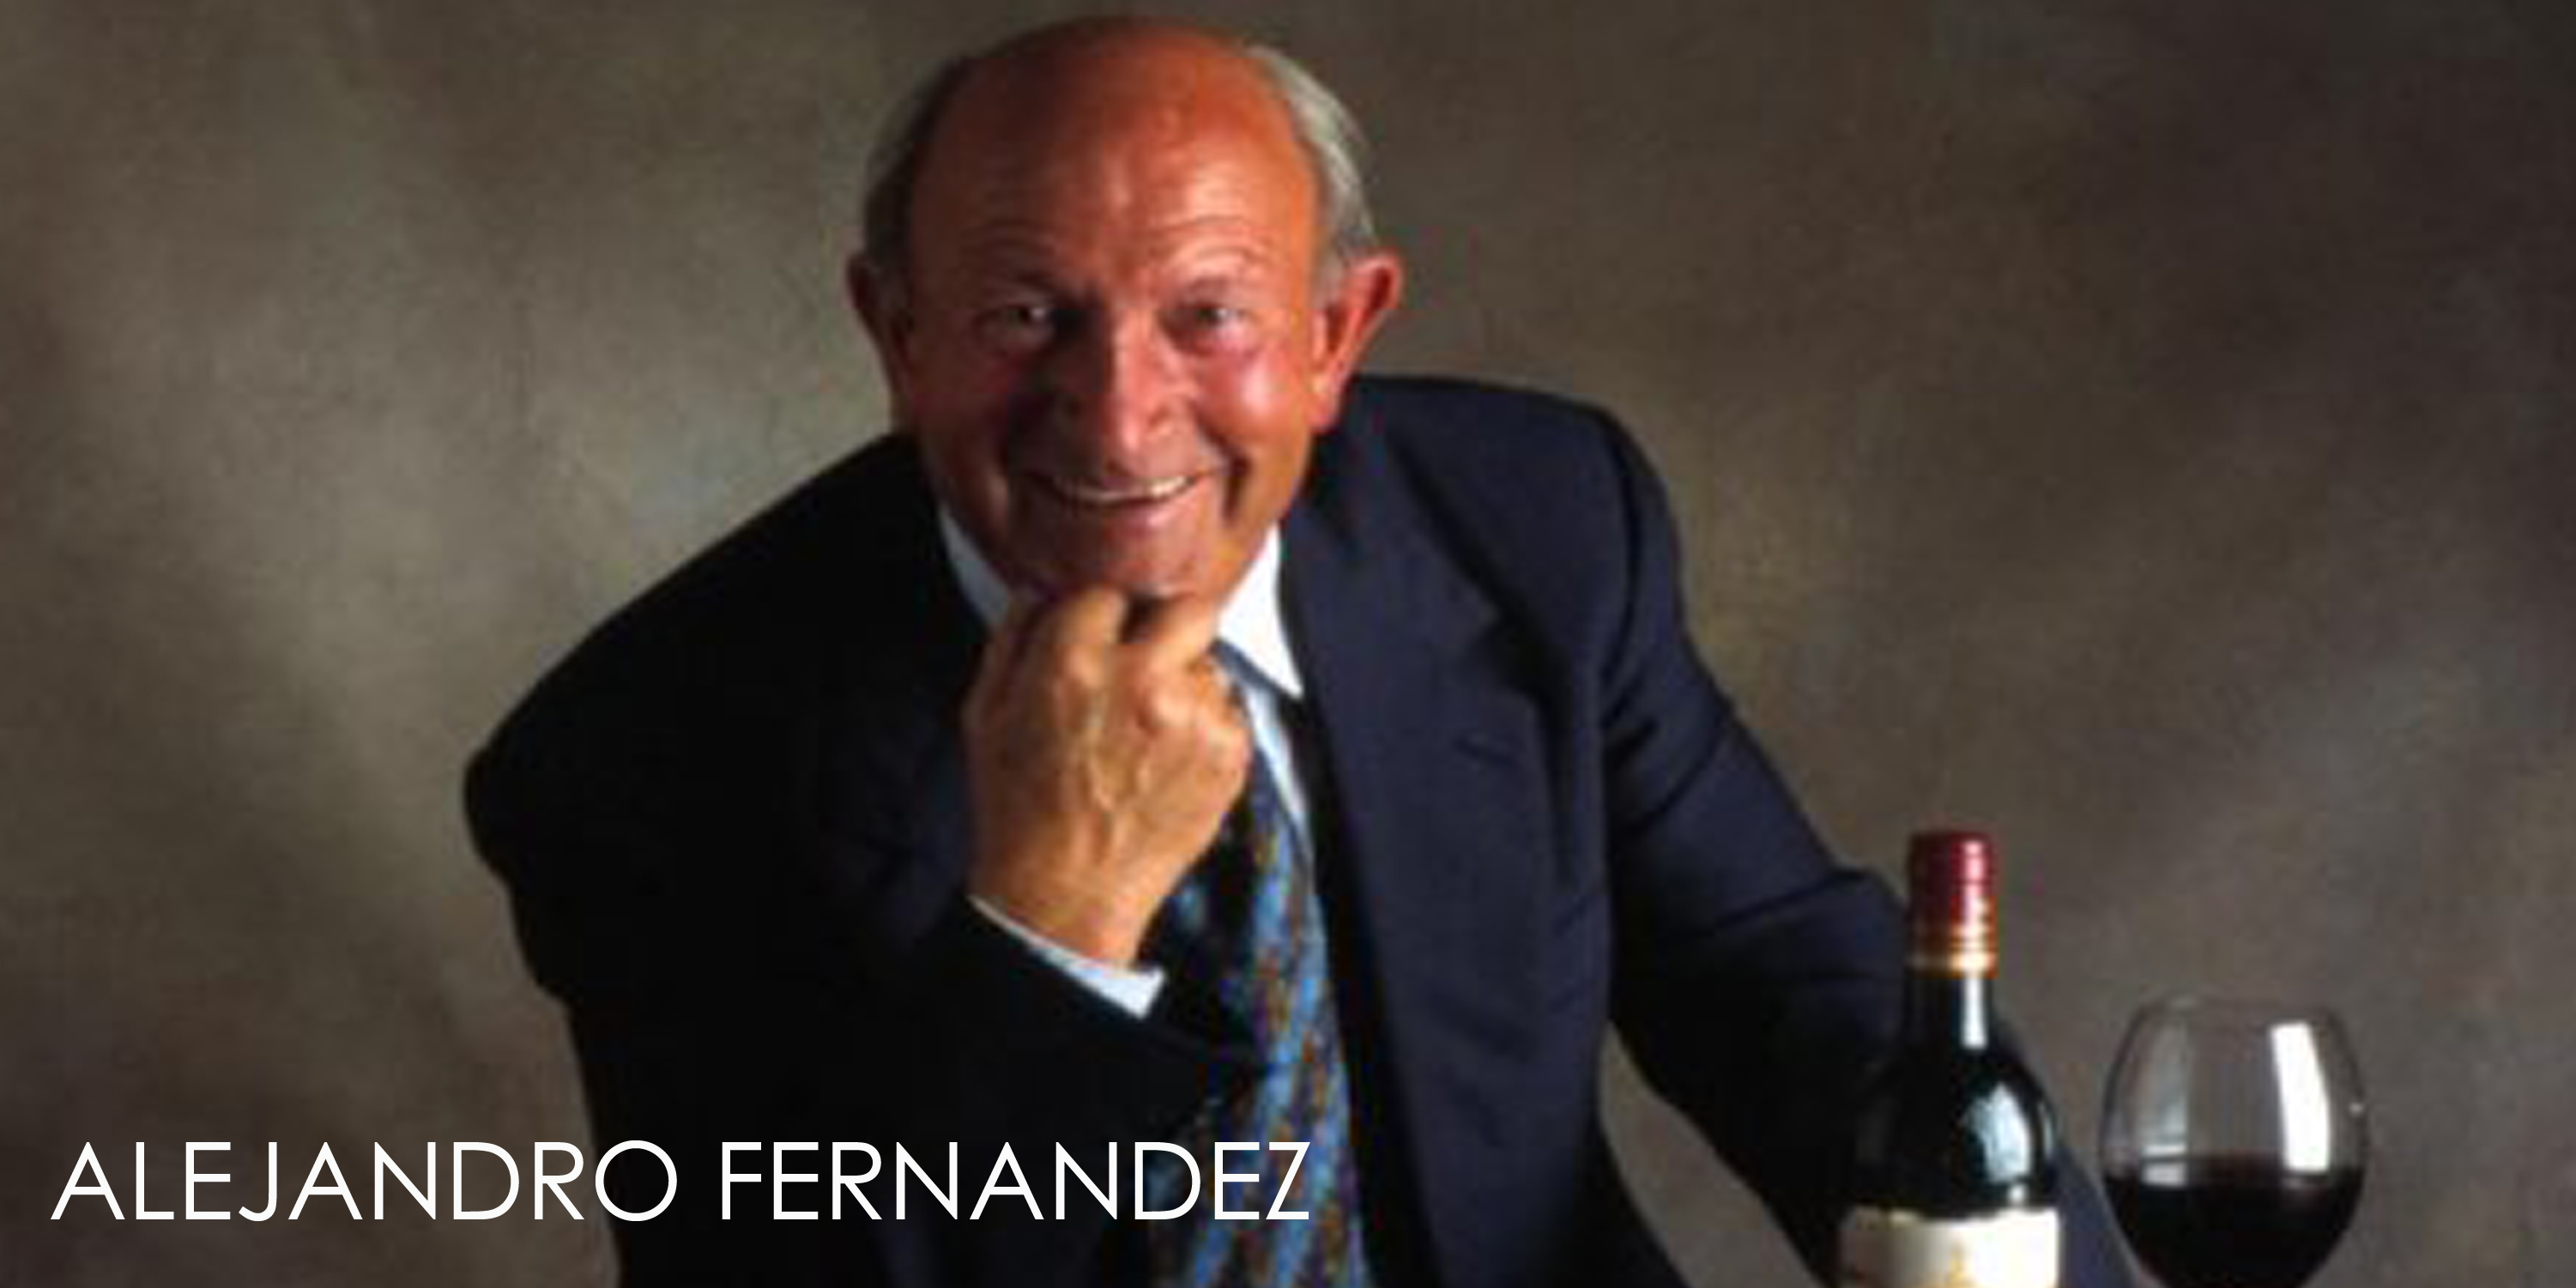 ALEJANDRO FERNANDEZ SPAIN HISPANIC WINE MAKERS